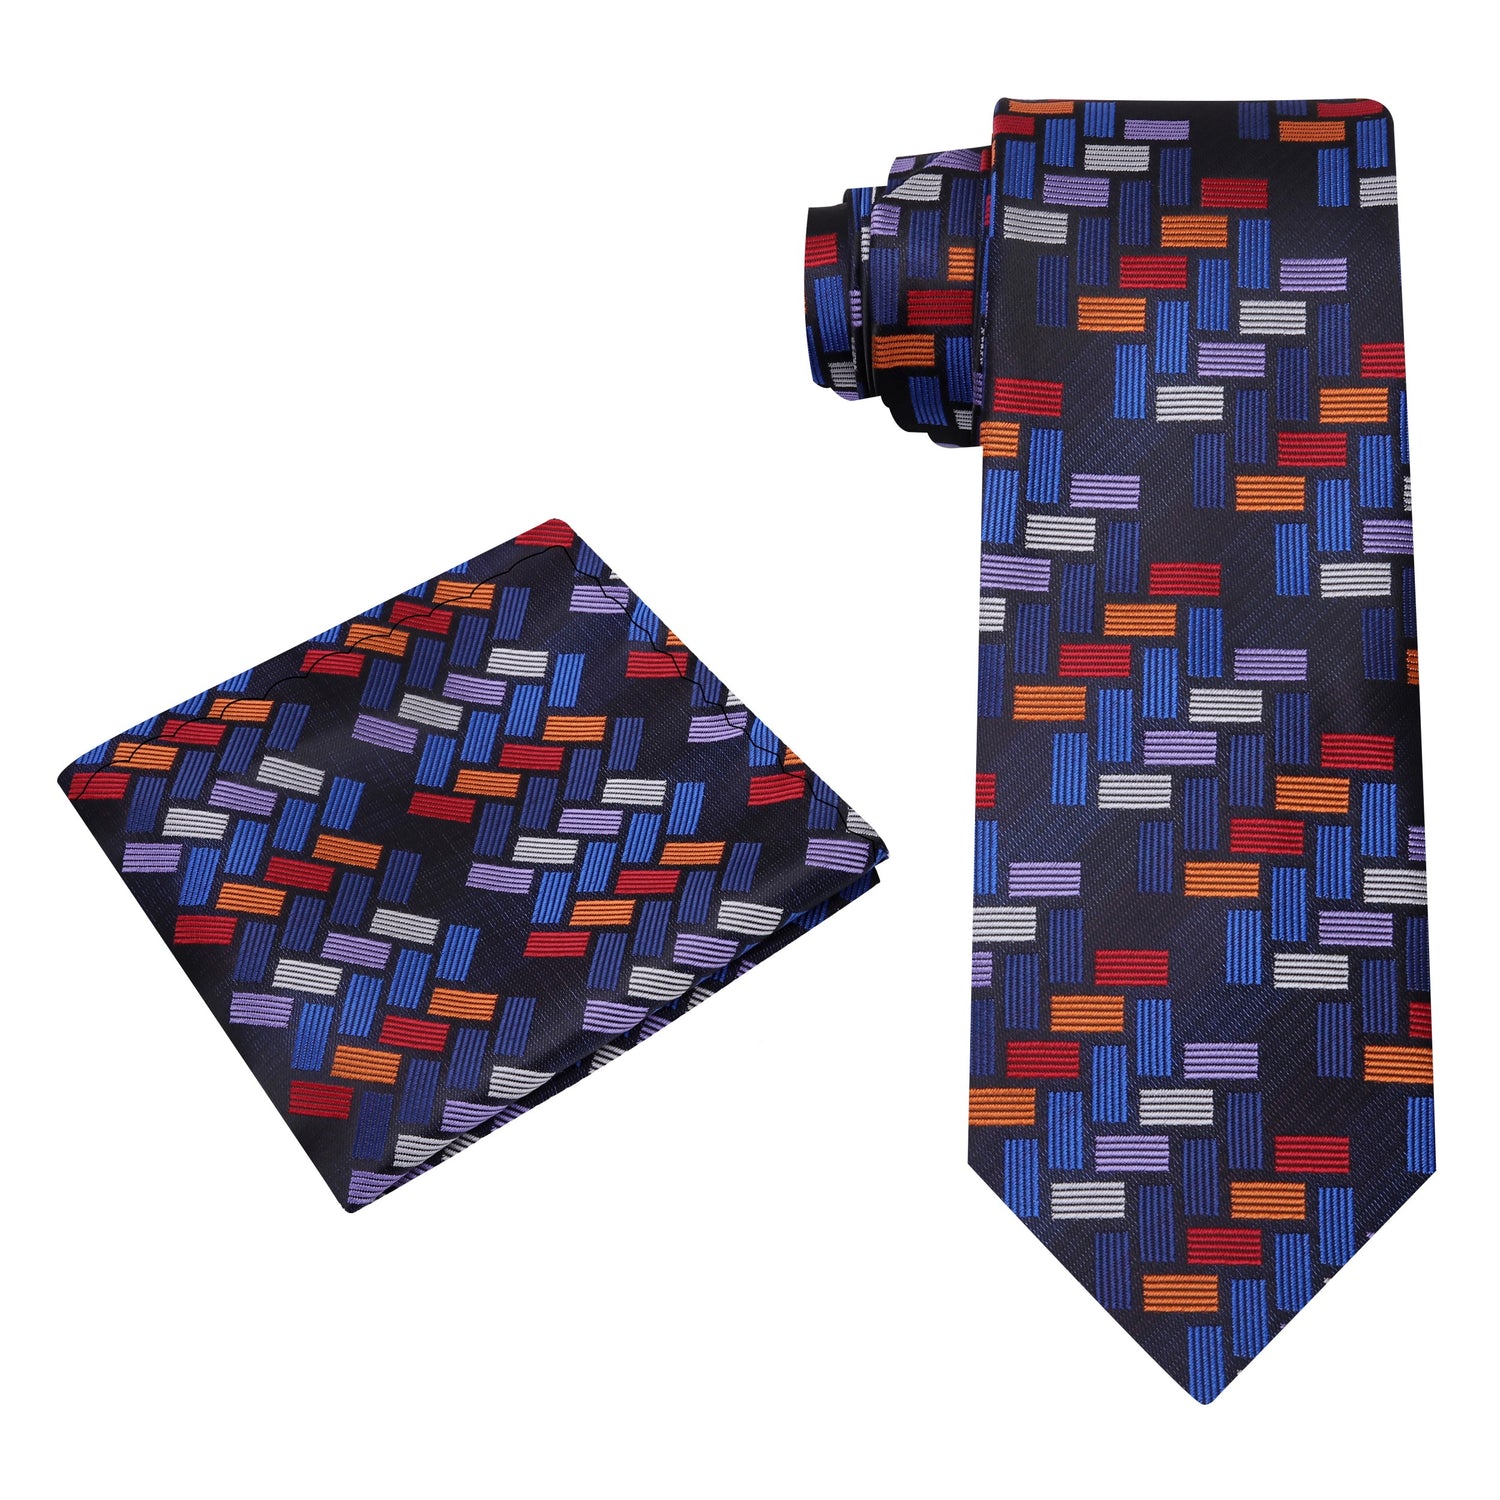 Alt View: Red, Blue, Orange Blocks Tie and Pocket Square